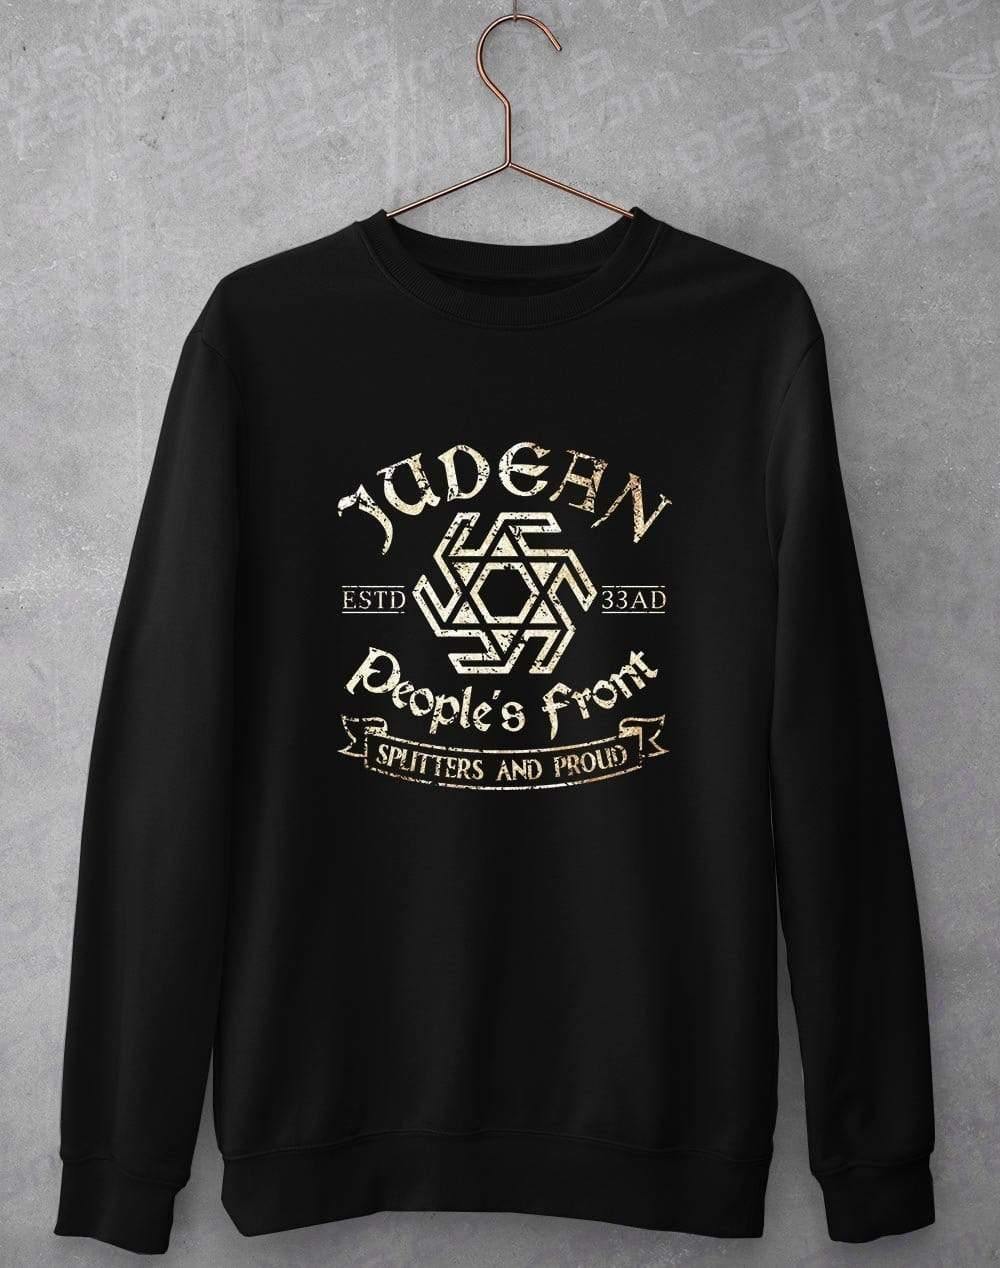 Judean Peoples Front Sweatshirt S / Black  - Off World Tees